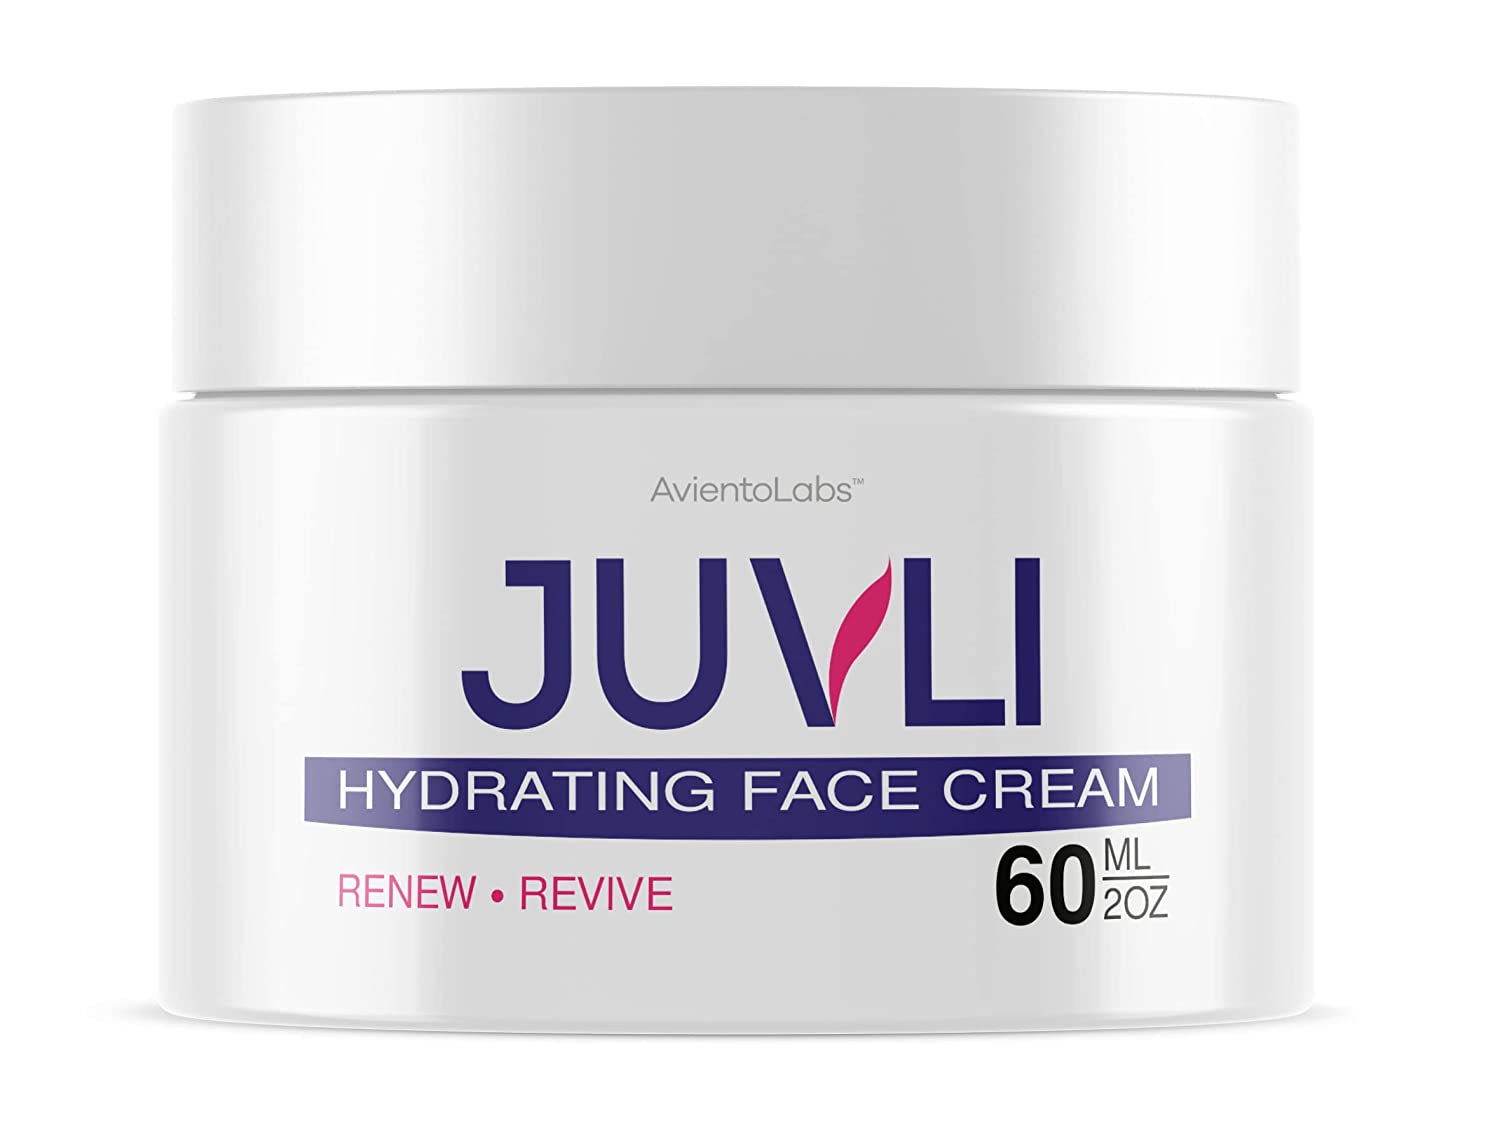 Juvli Hydrating Face Cream Official Website